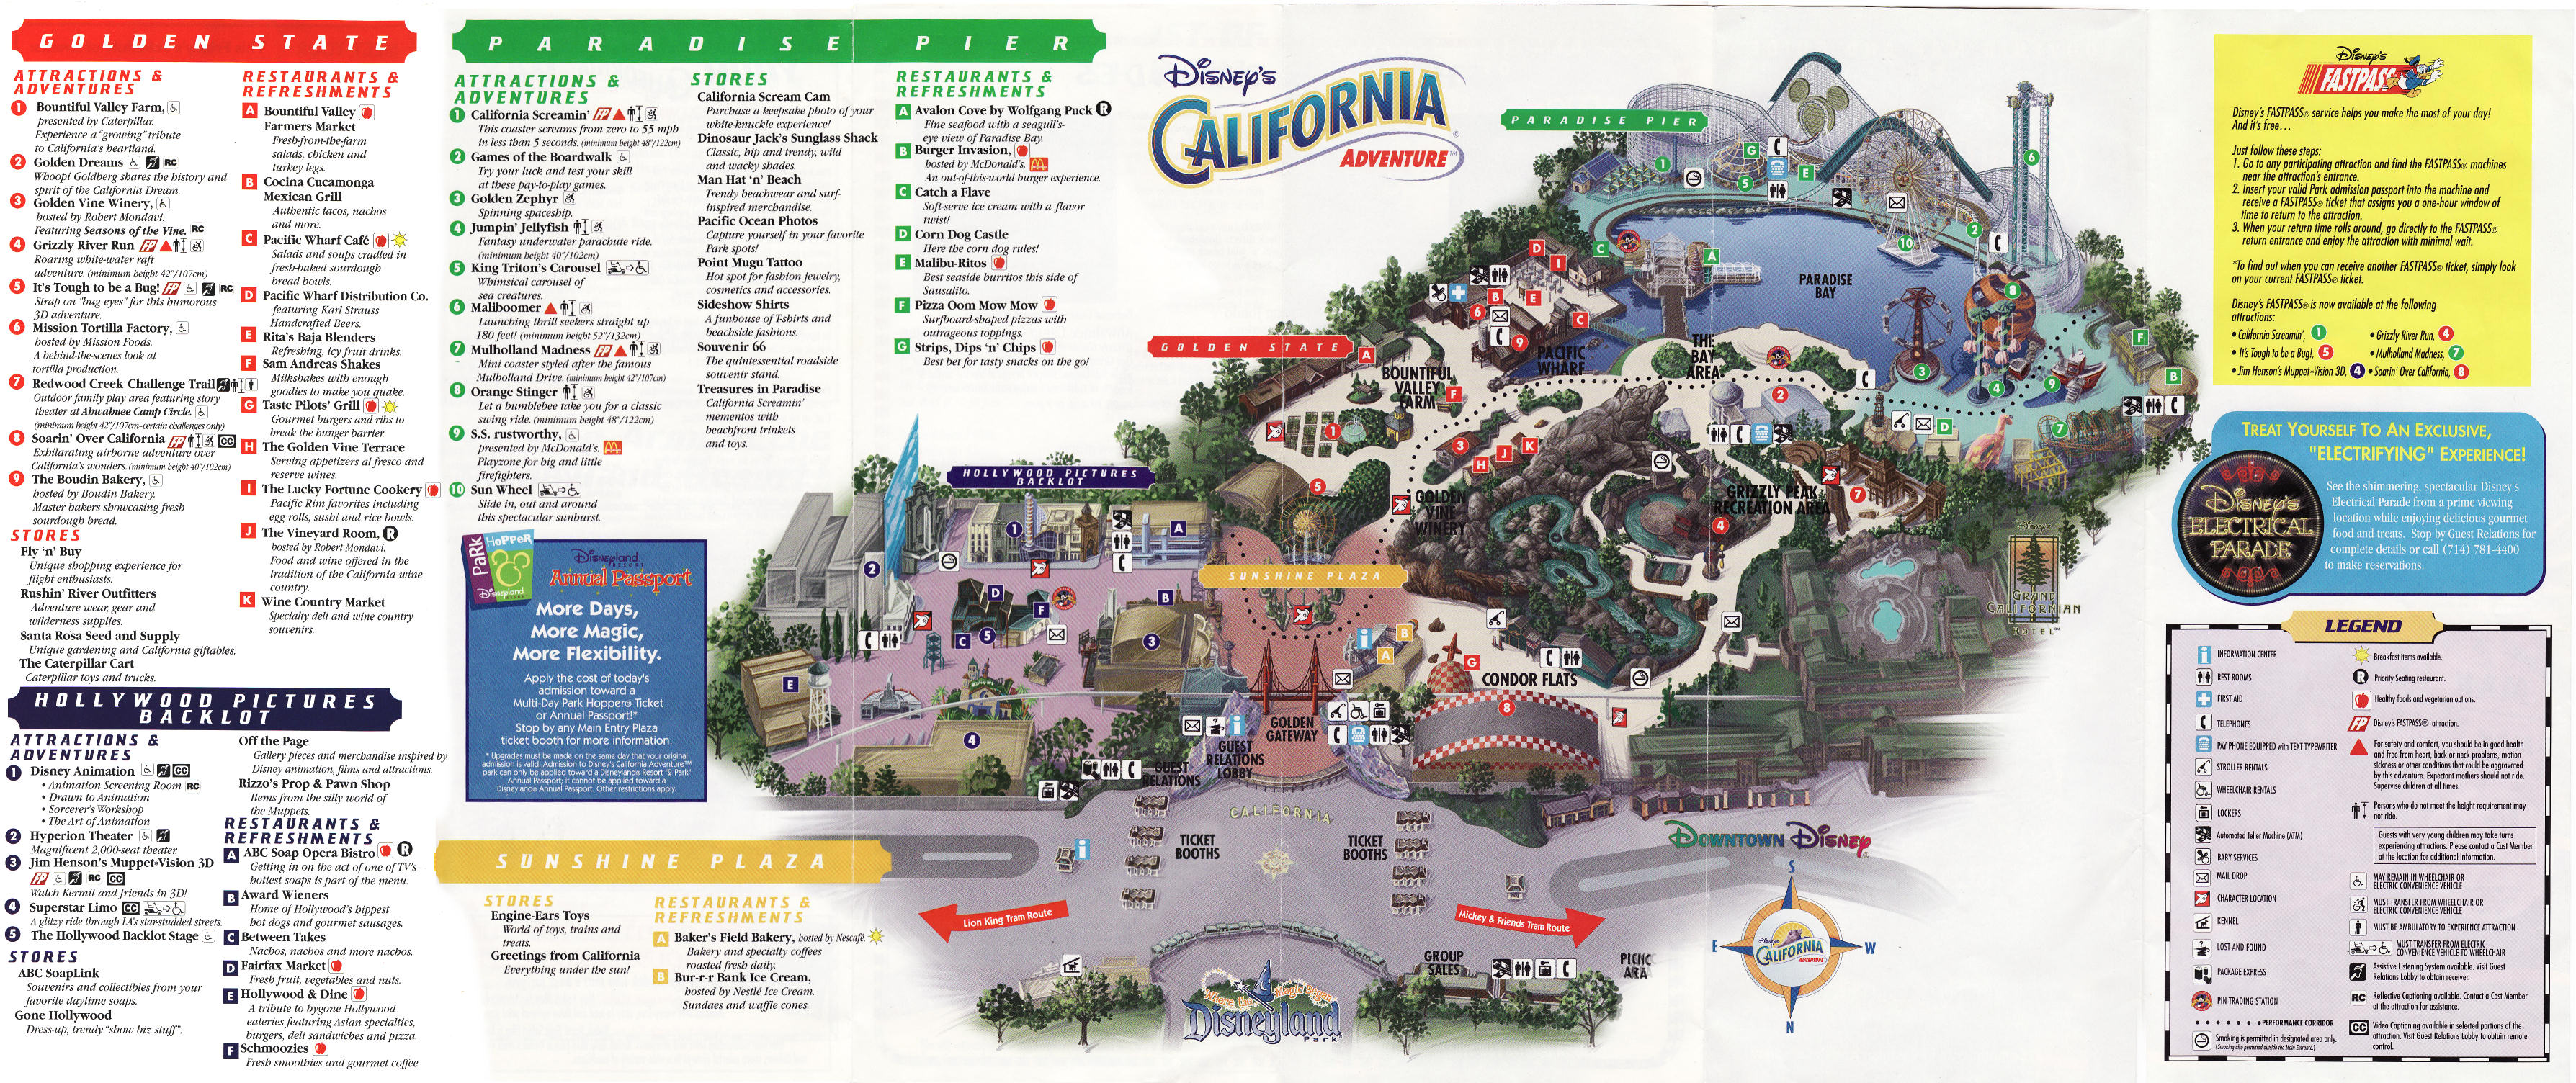 California Adventure Opens February 8 2001